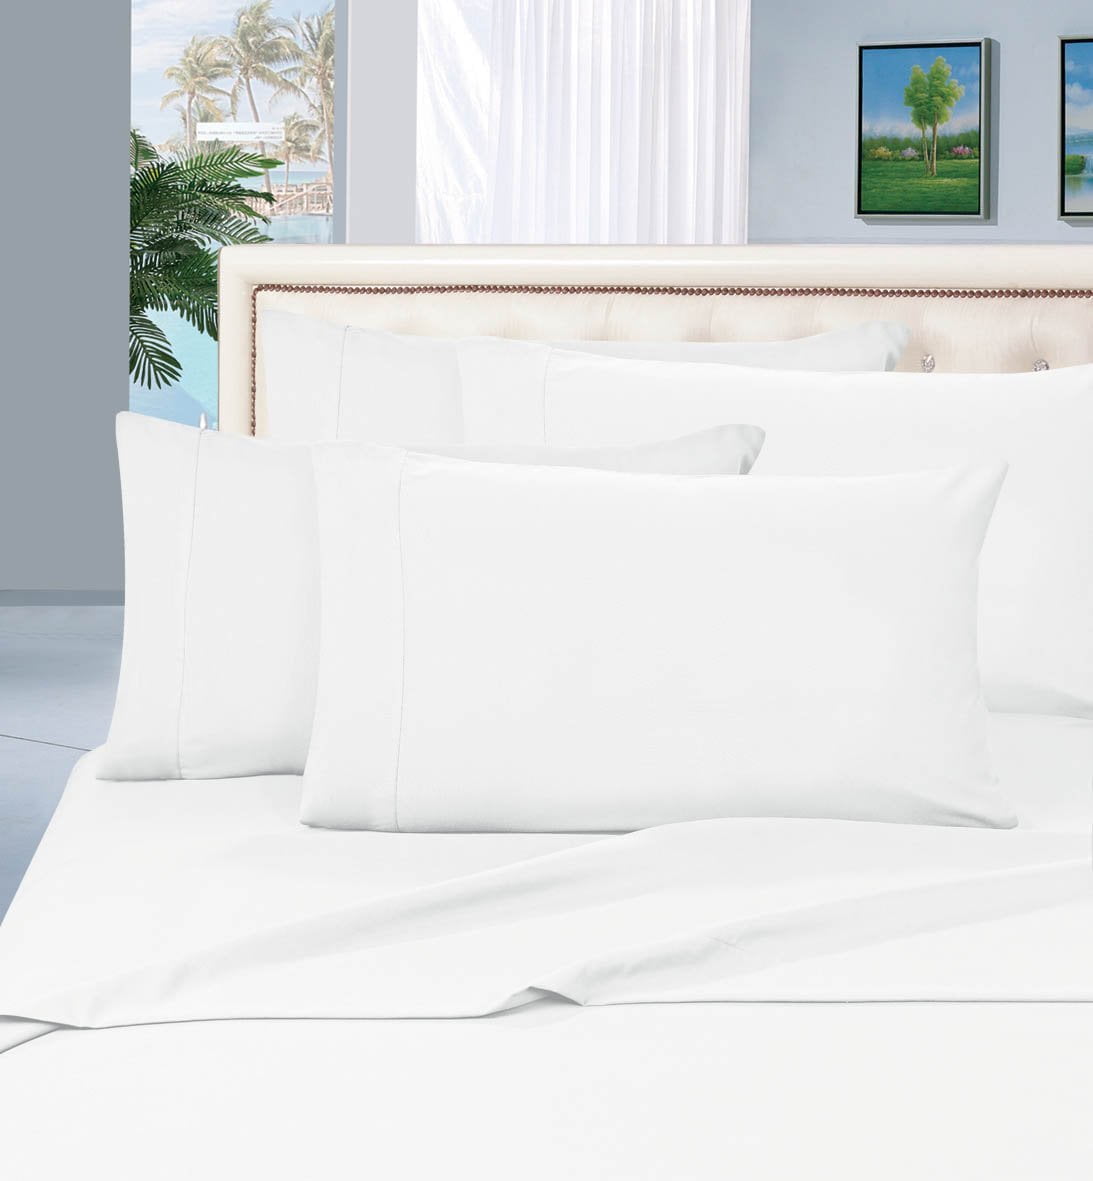 71 Home Textiles Bedding Set Bedclothes include Duvet Cover Bed Sheet  Pillowcase Comforter Bedding Sets Bed Linen